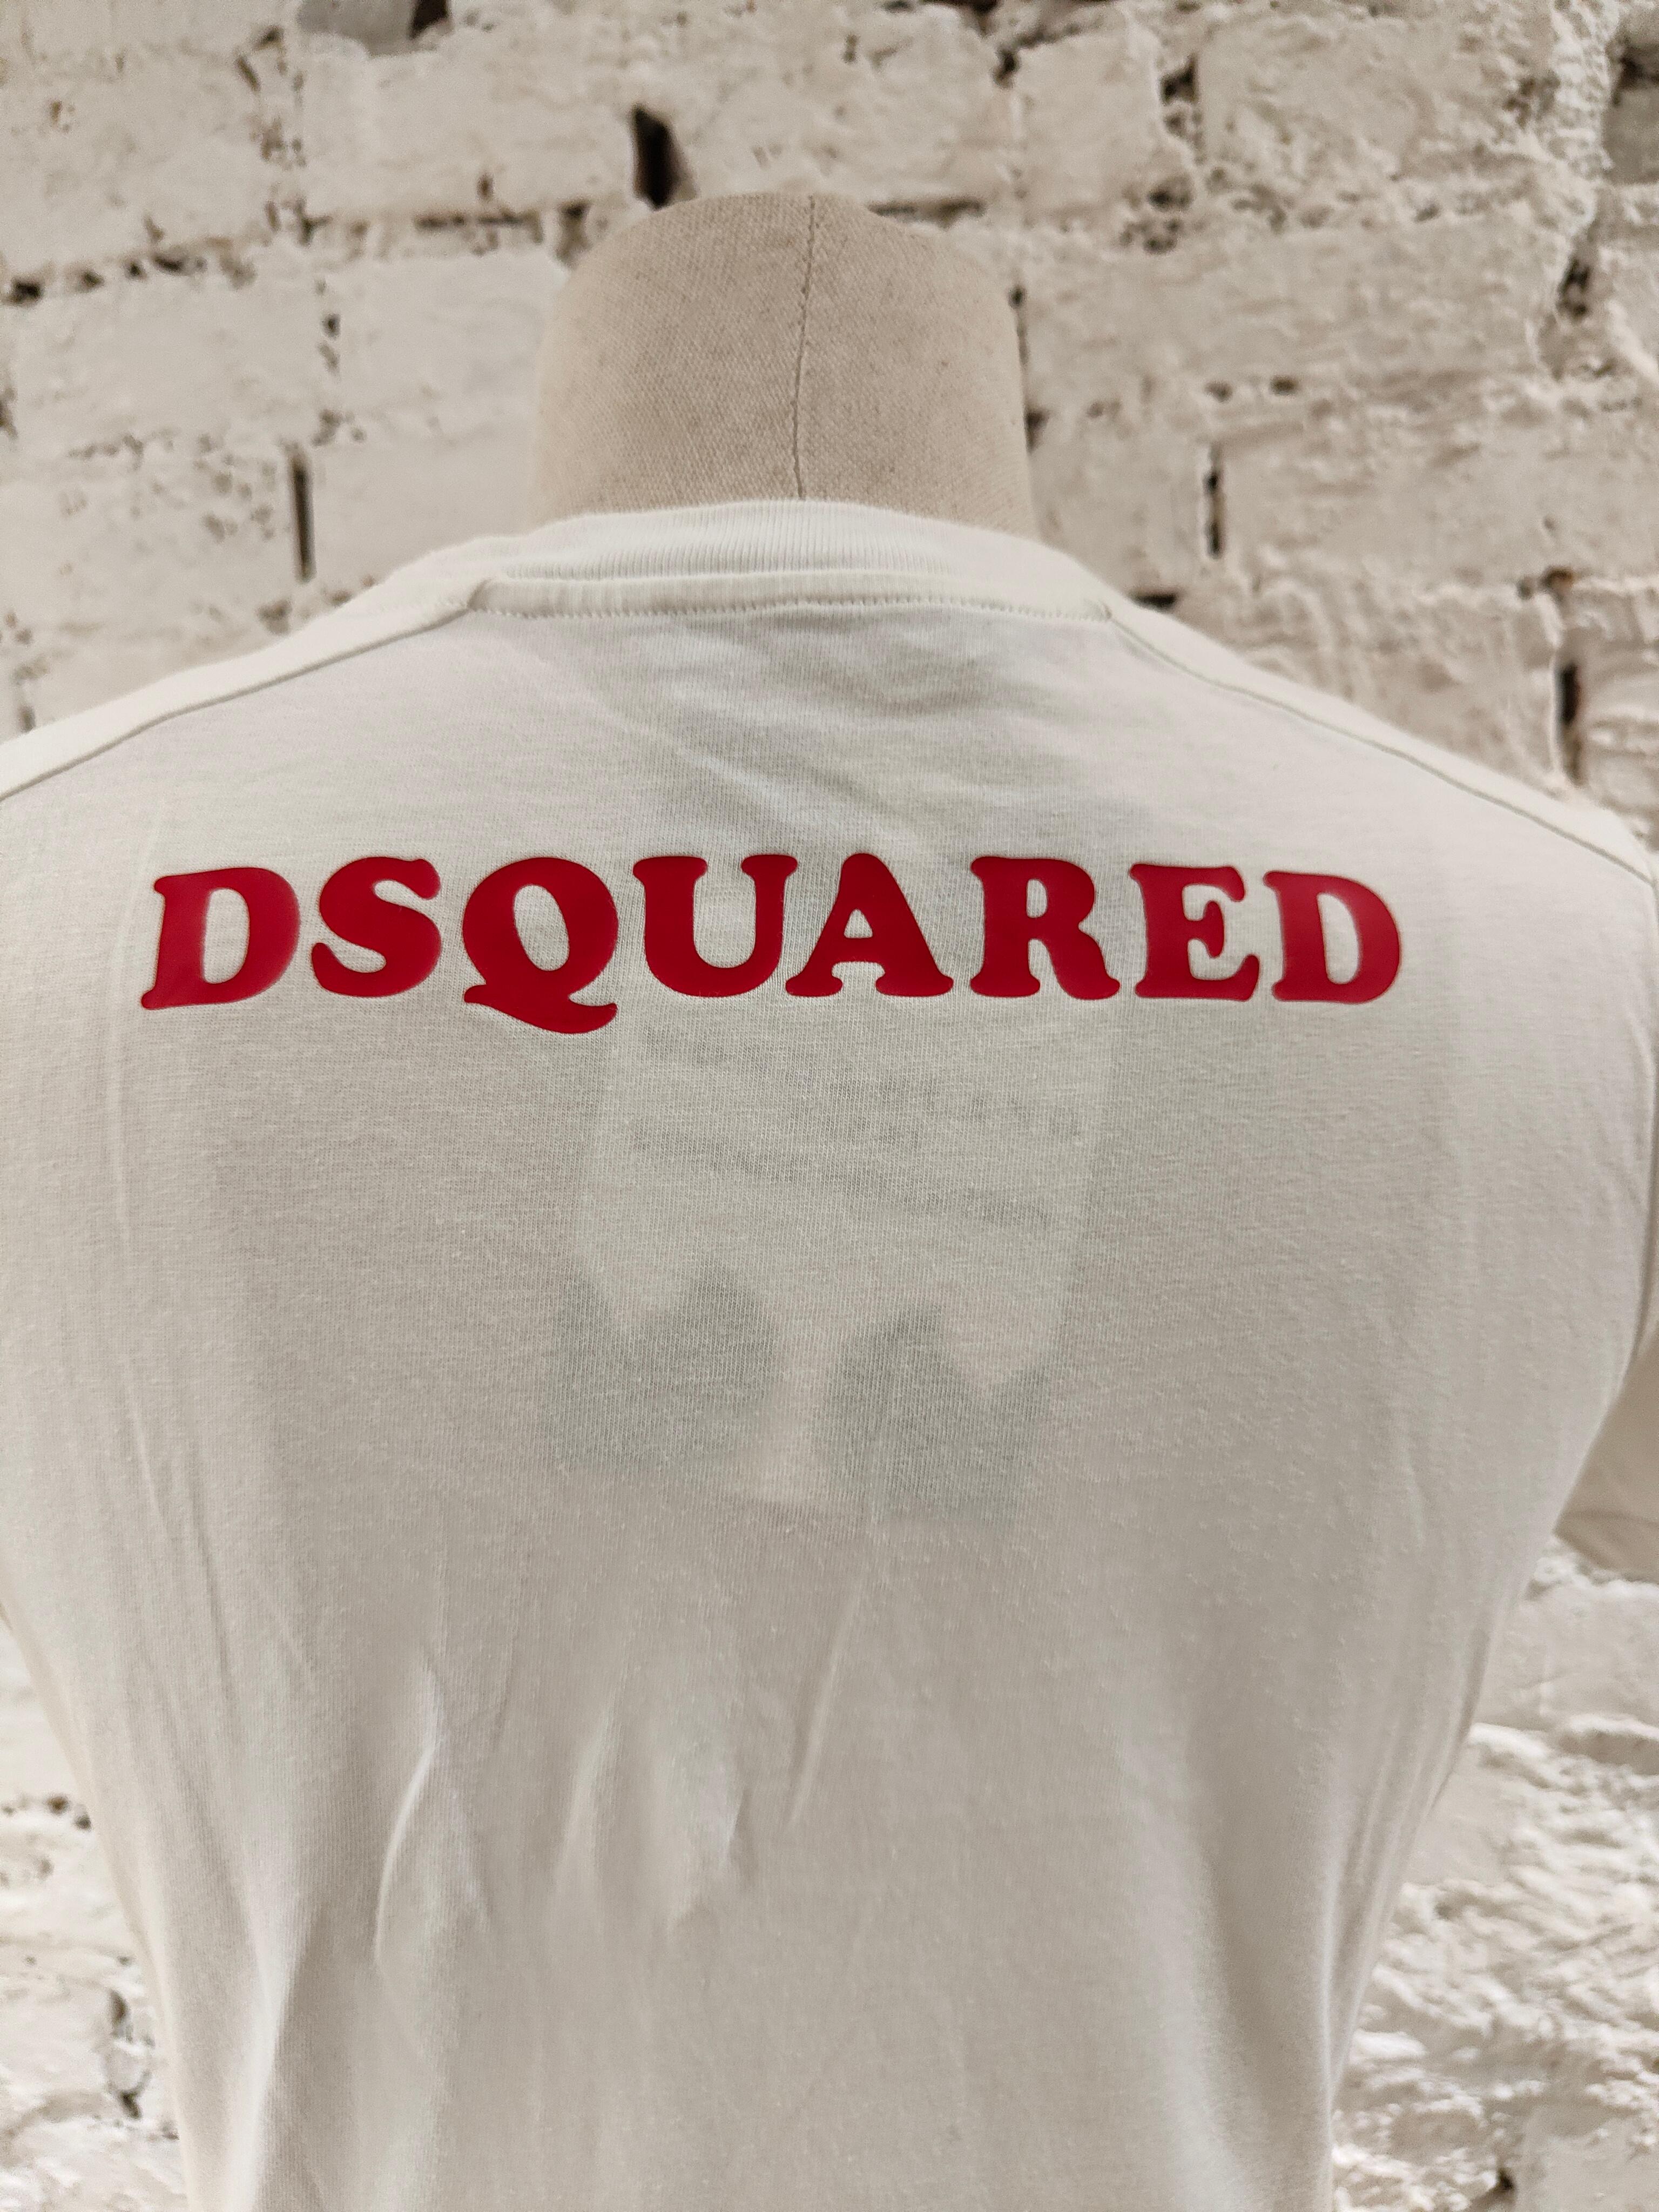 dsquared dean and dan t shirt